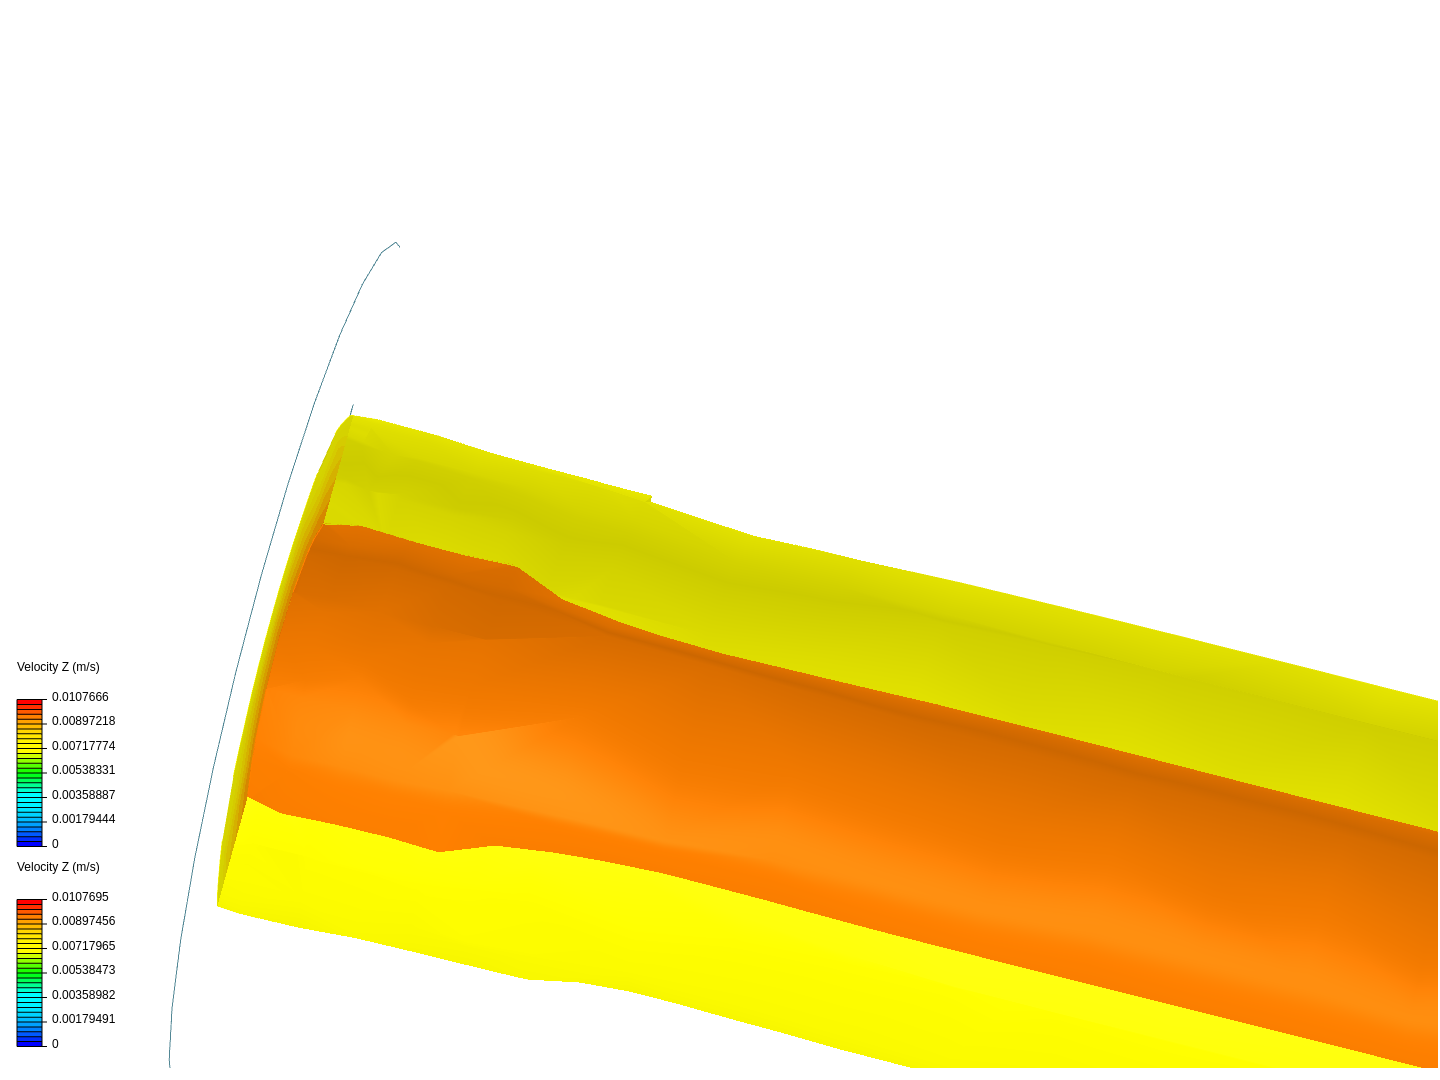 Laminar flow in circular pipe image